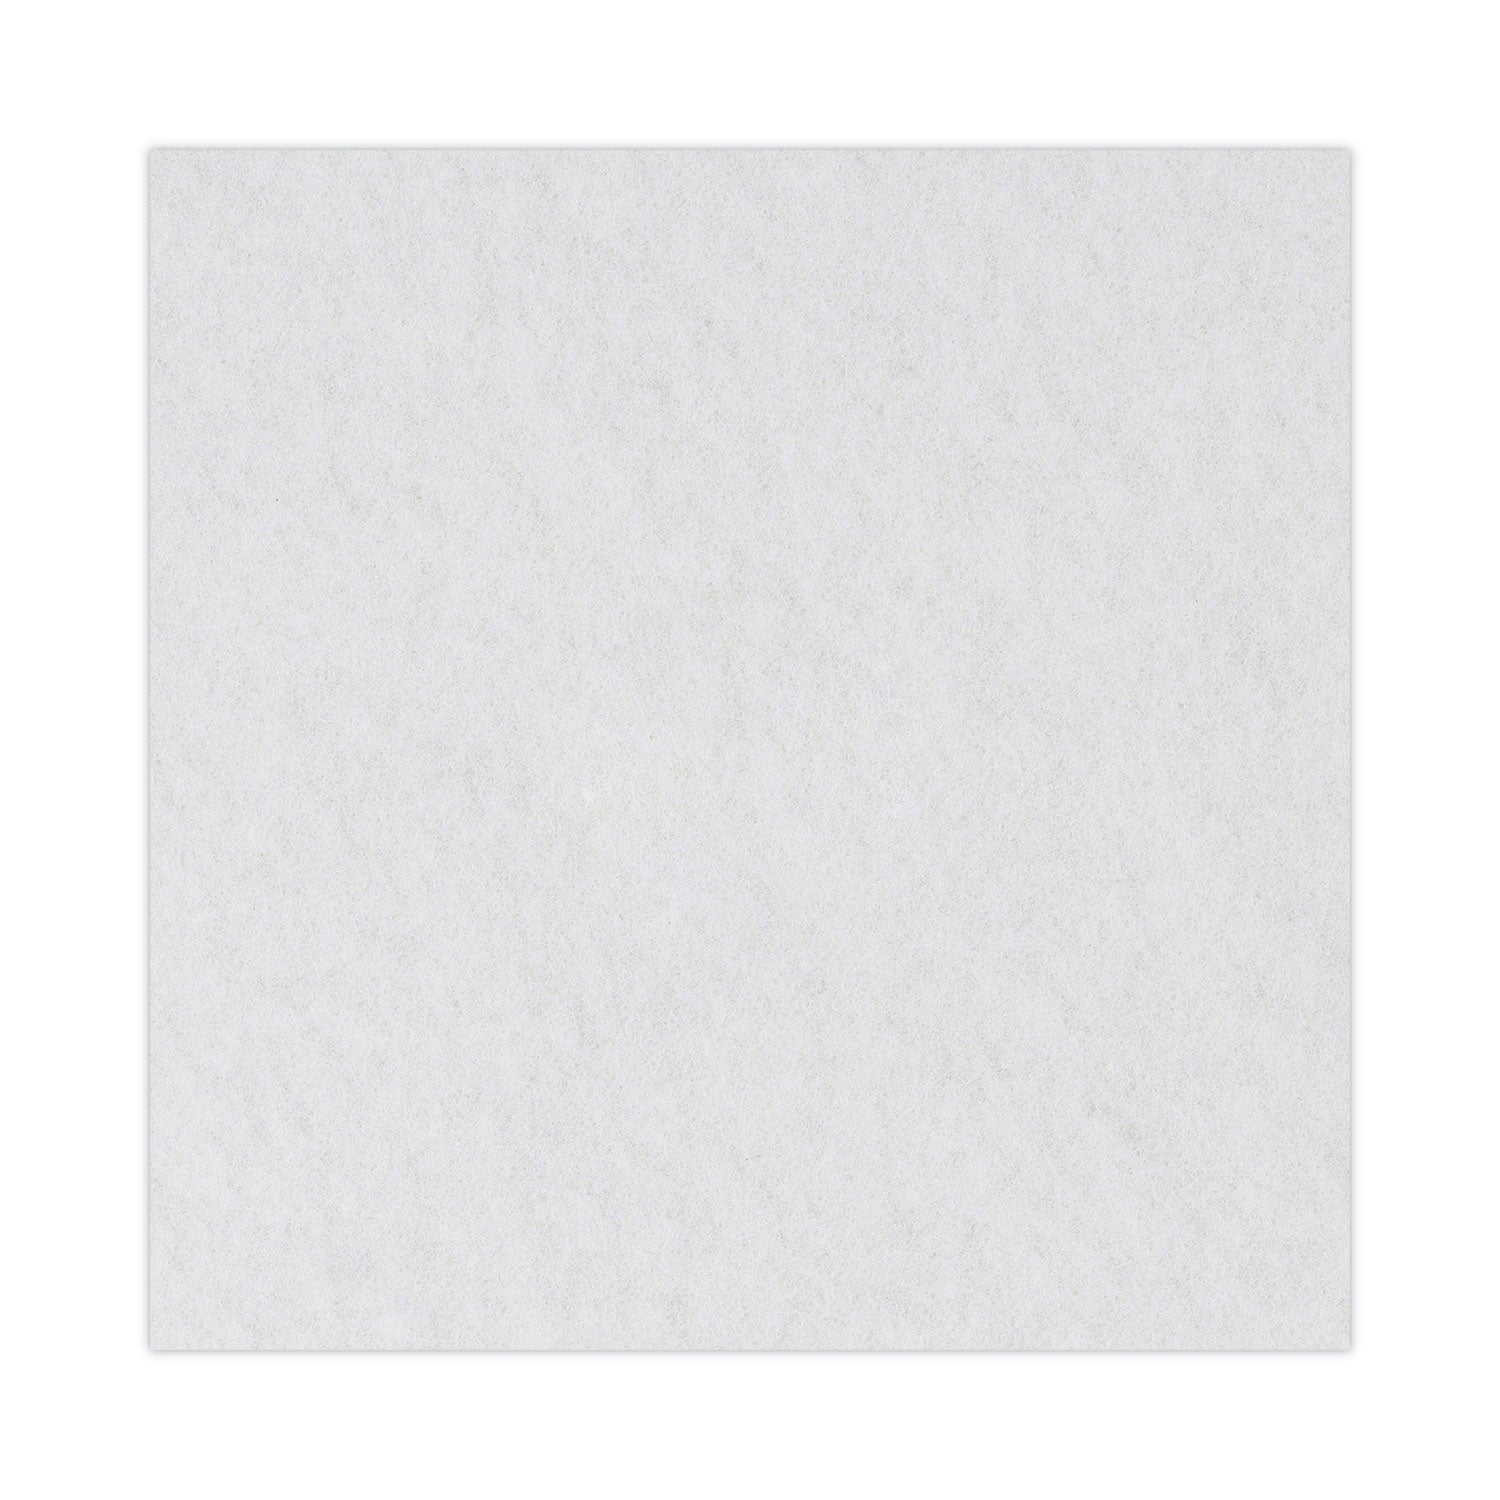 polishing-floor-pads-14-diameter-white-5-carton_bwk4014whi - 6